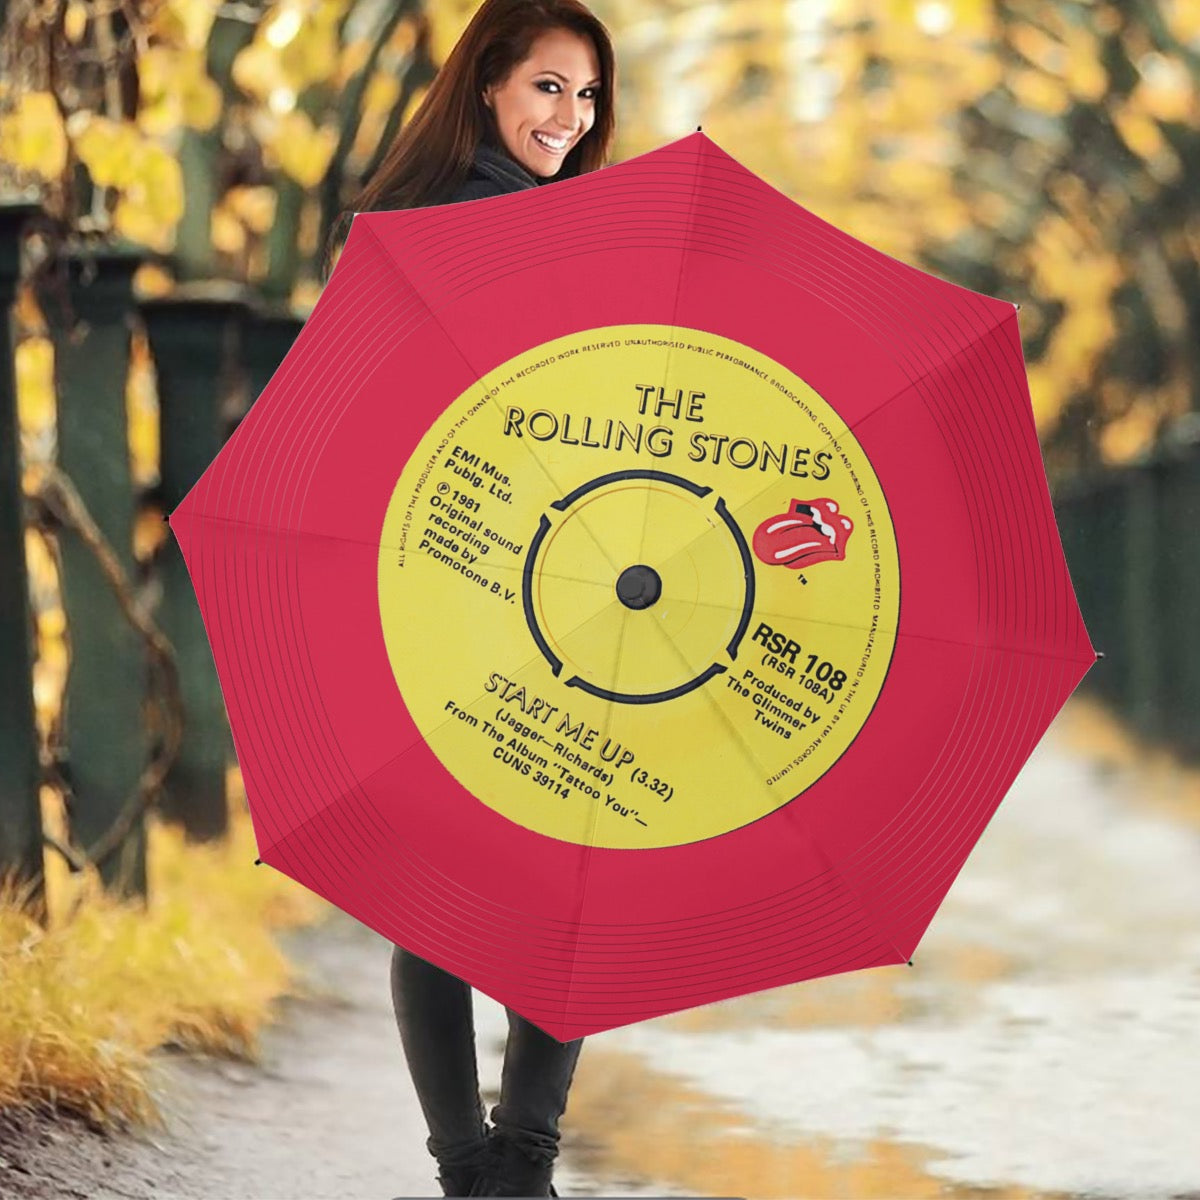 Rolling Stones, Star me up, vinyl record Umbrella